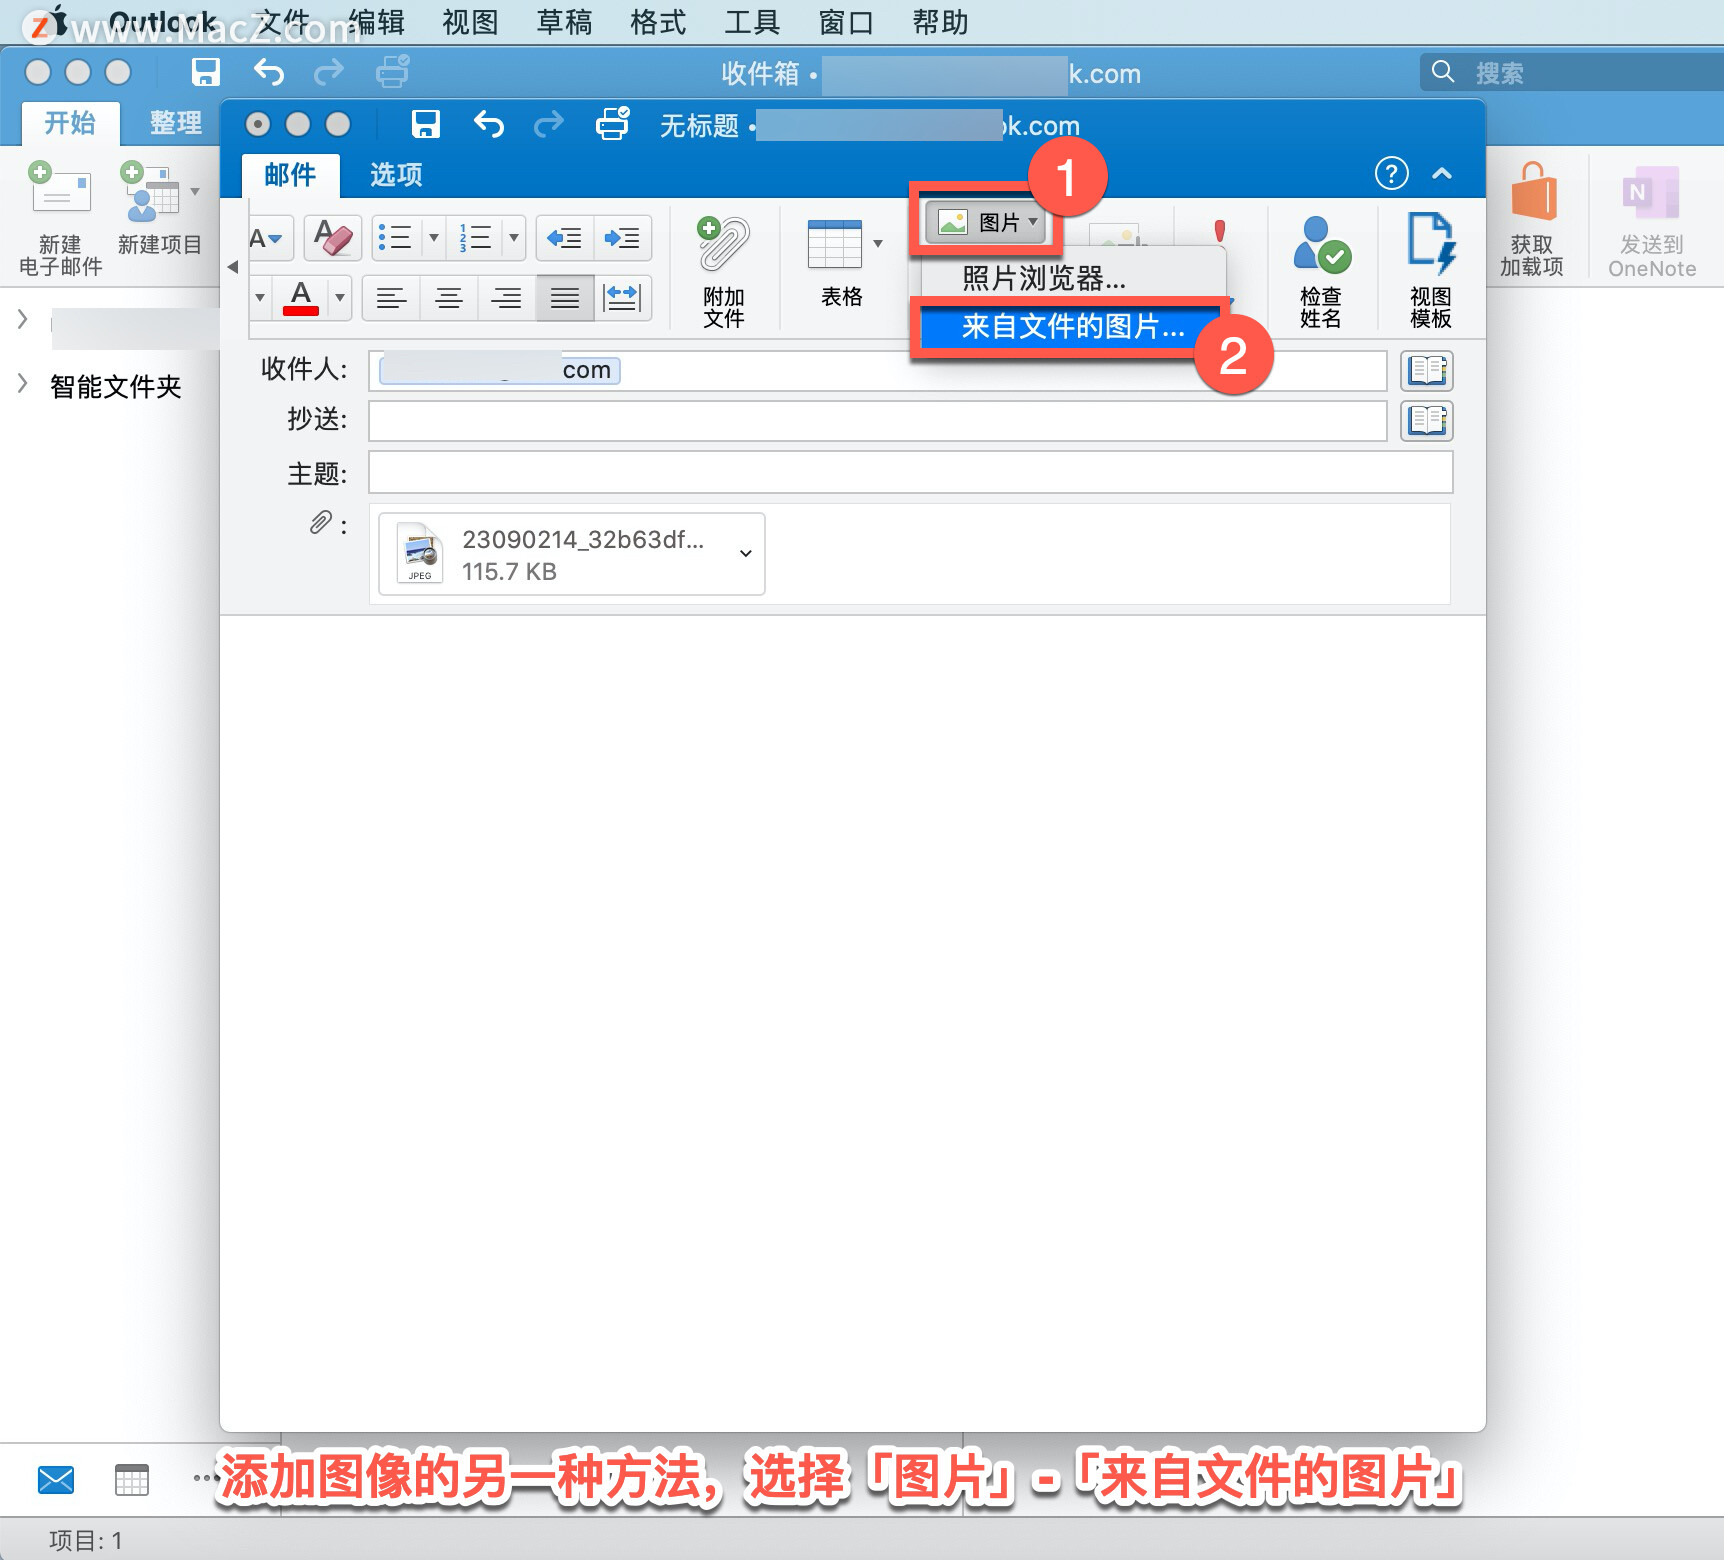 Microsoft Outlook 教程「4」，如何在 Outlook 中发送和接收附件？